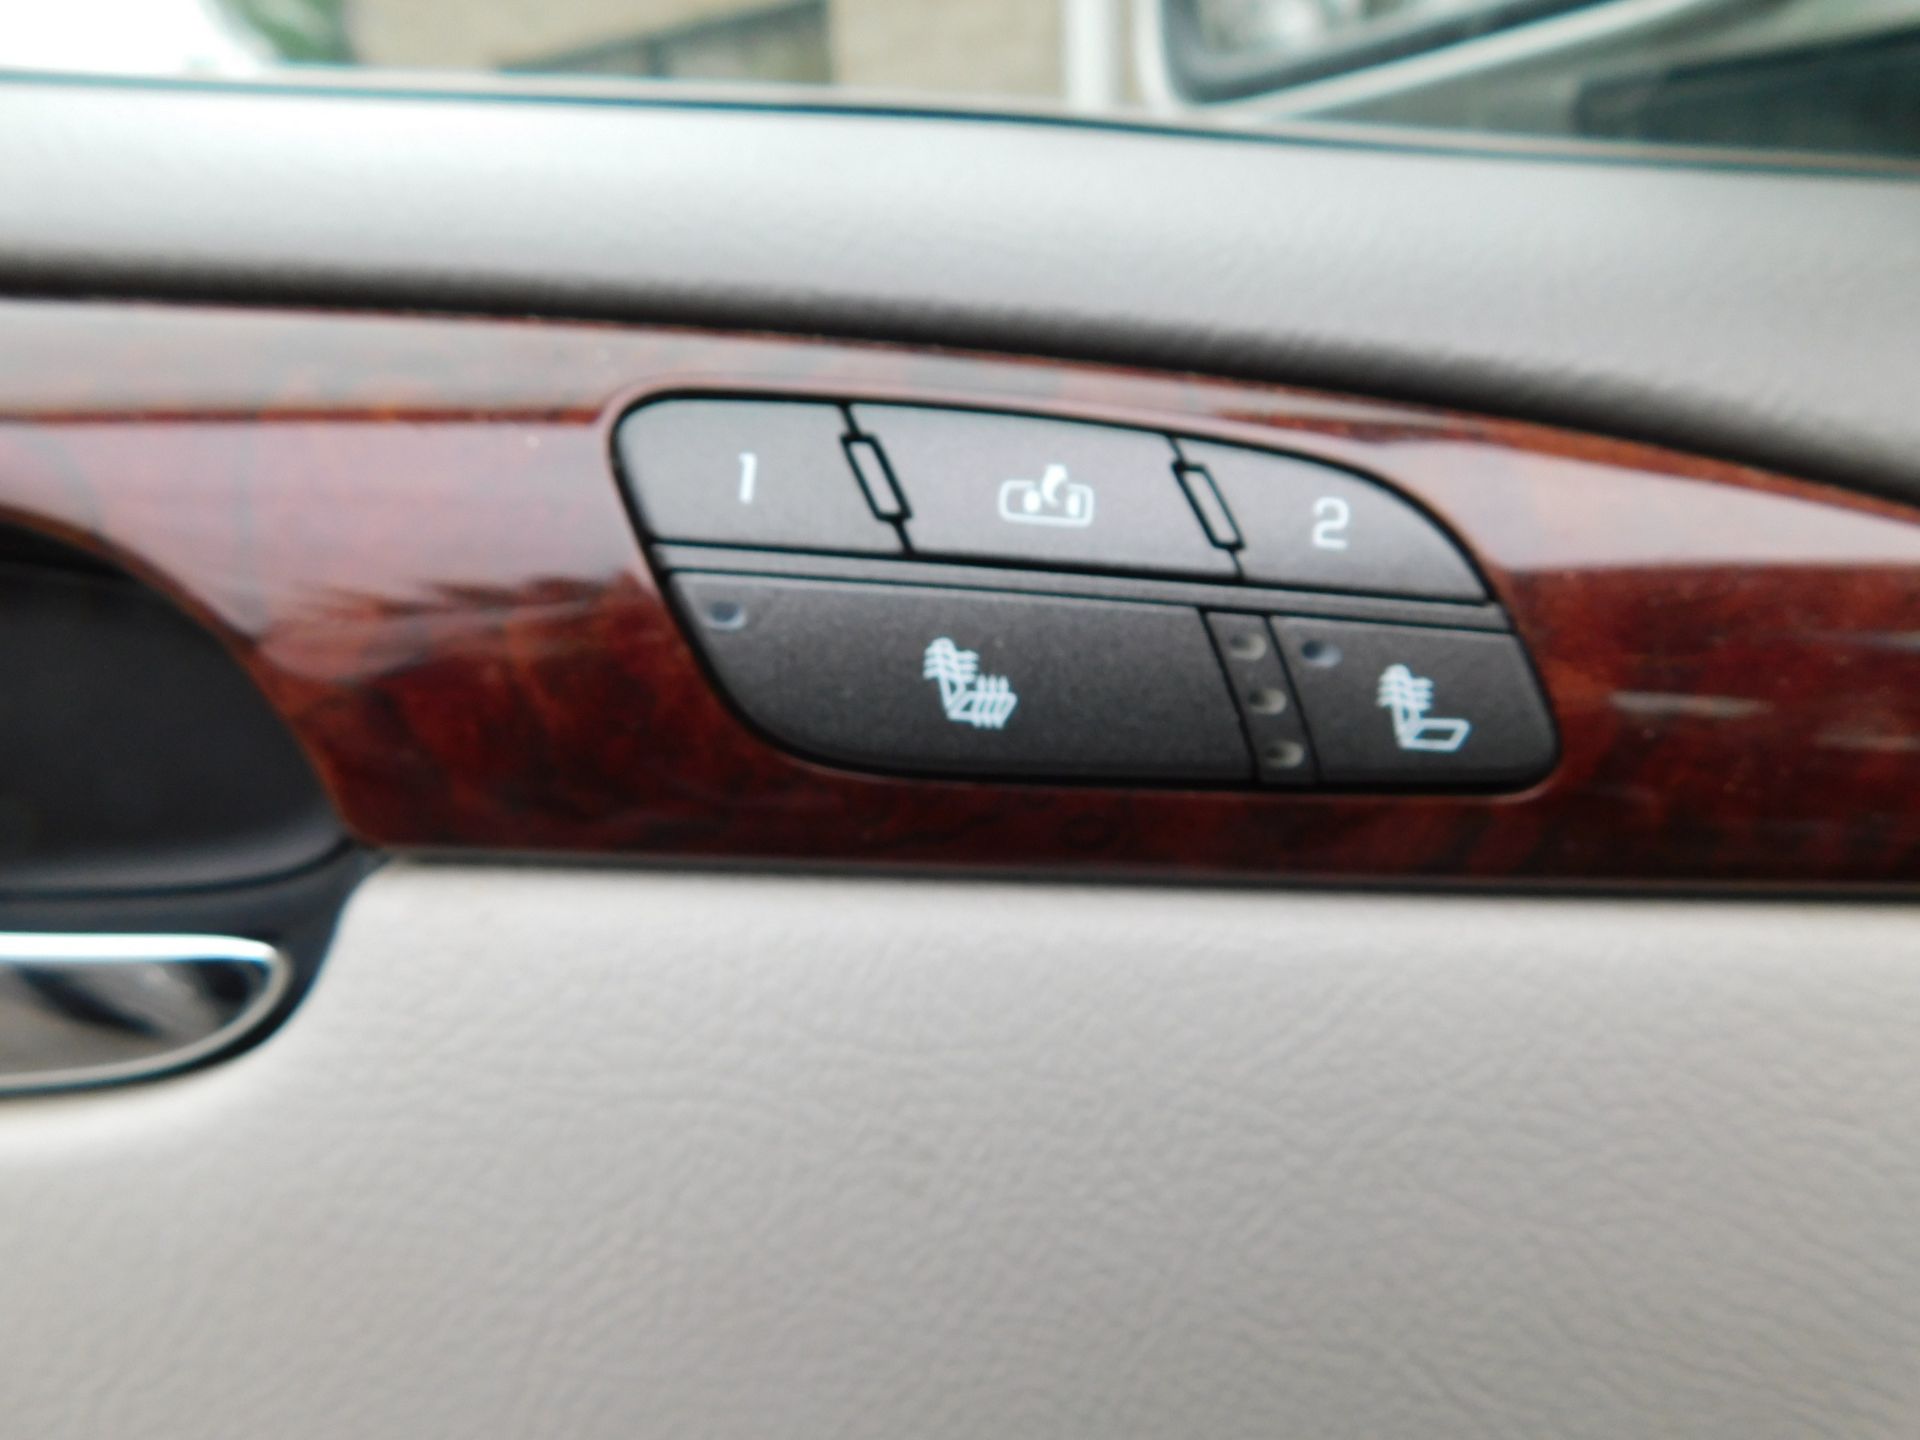 2007 Buick Lucerne CXL 4-Door Sedan, VIN 1G4HD57287U226782, Leather, Heated Seats, Automatic, PW, - Image 20 of 22